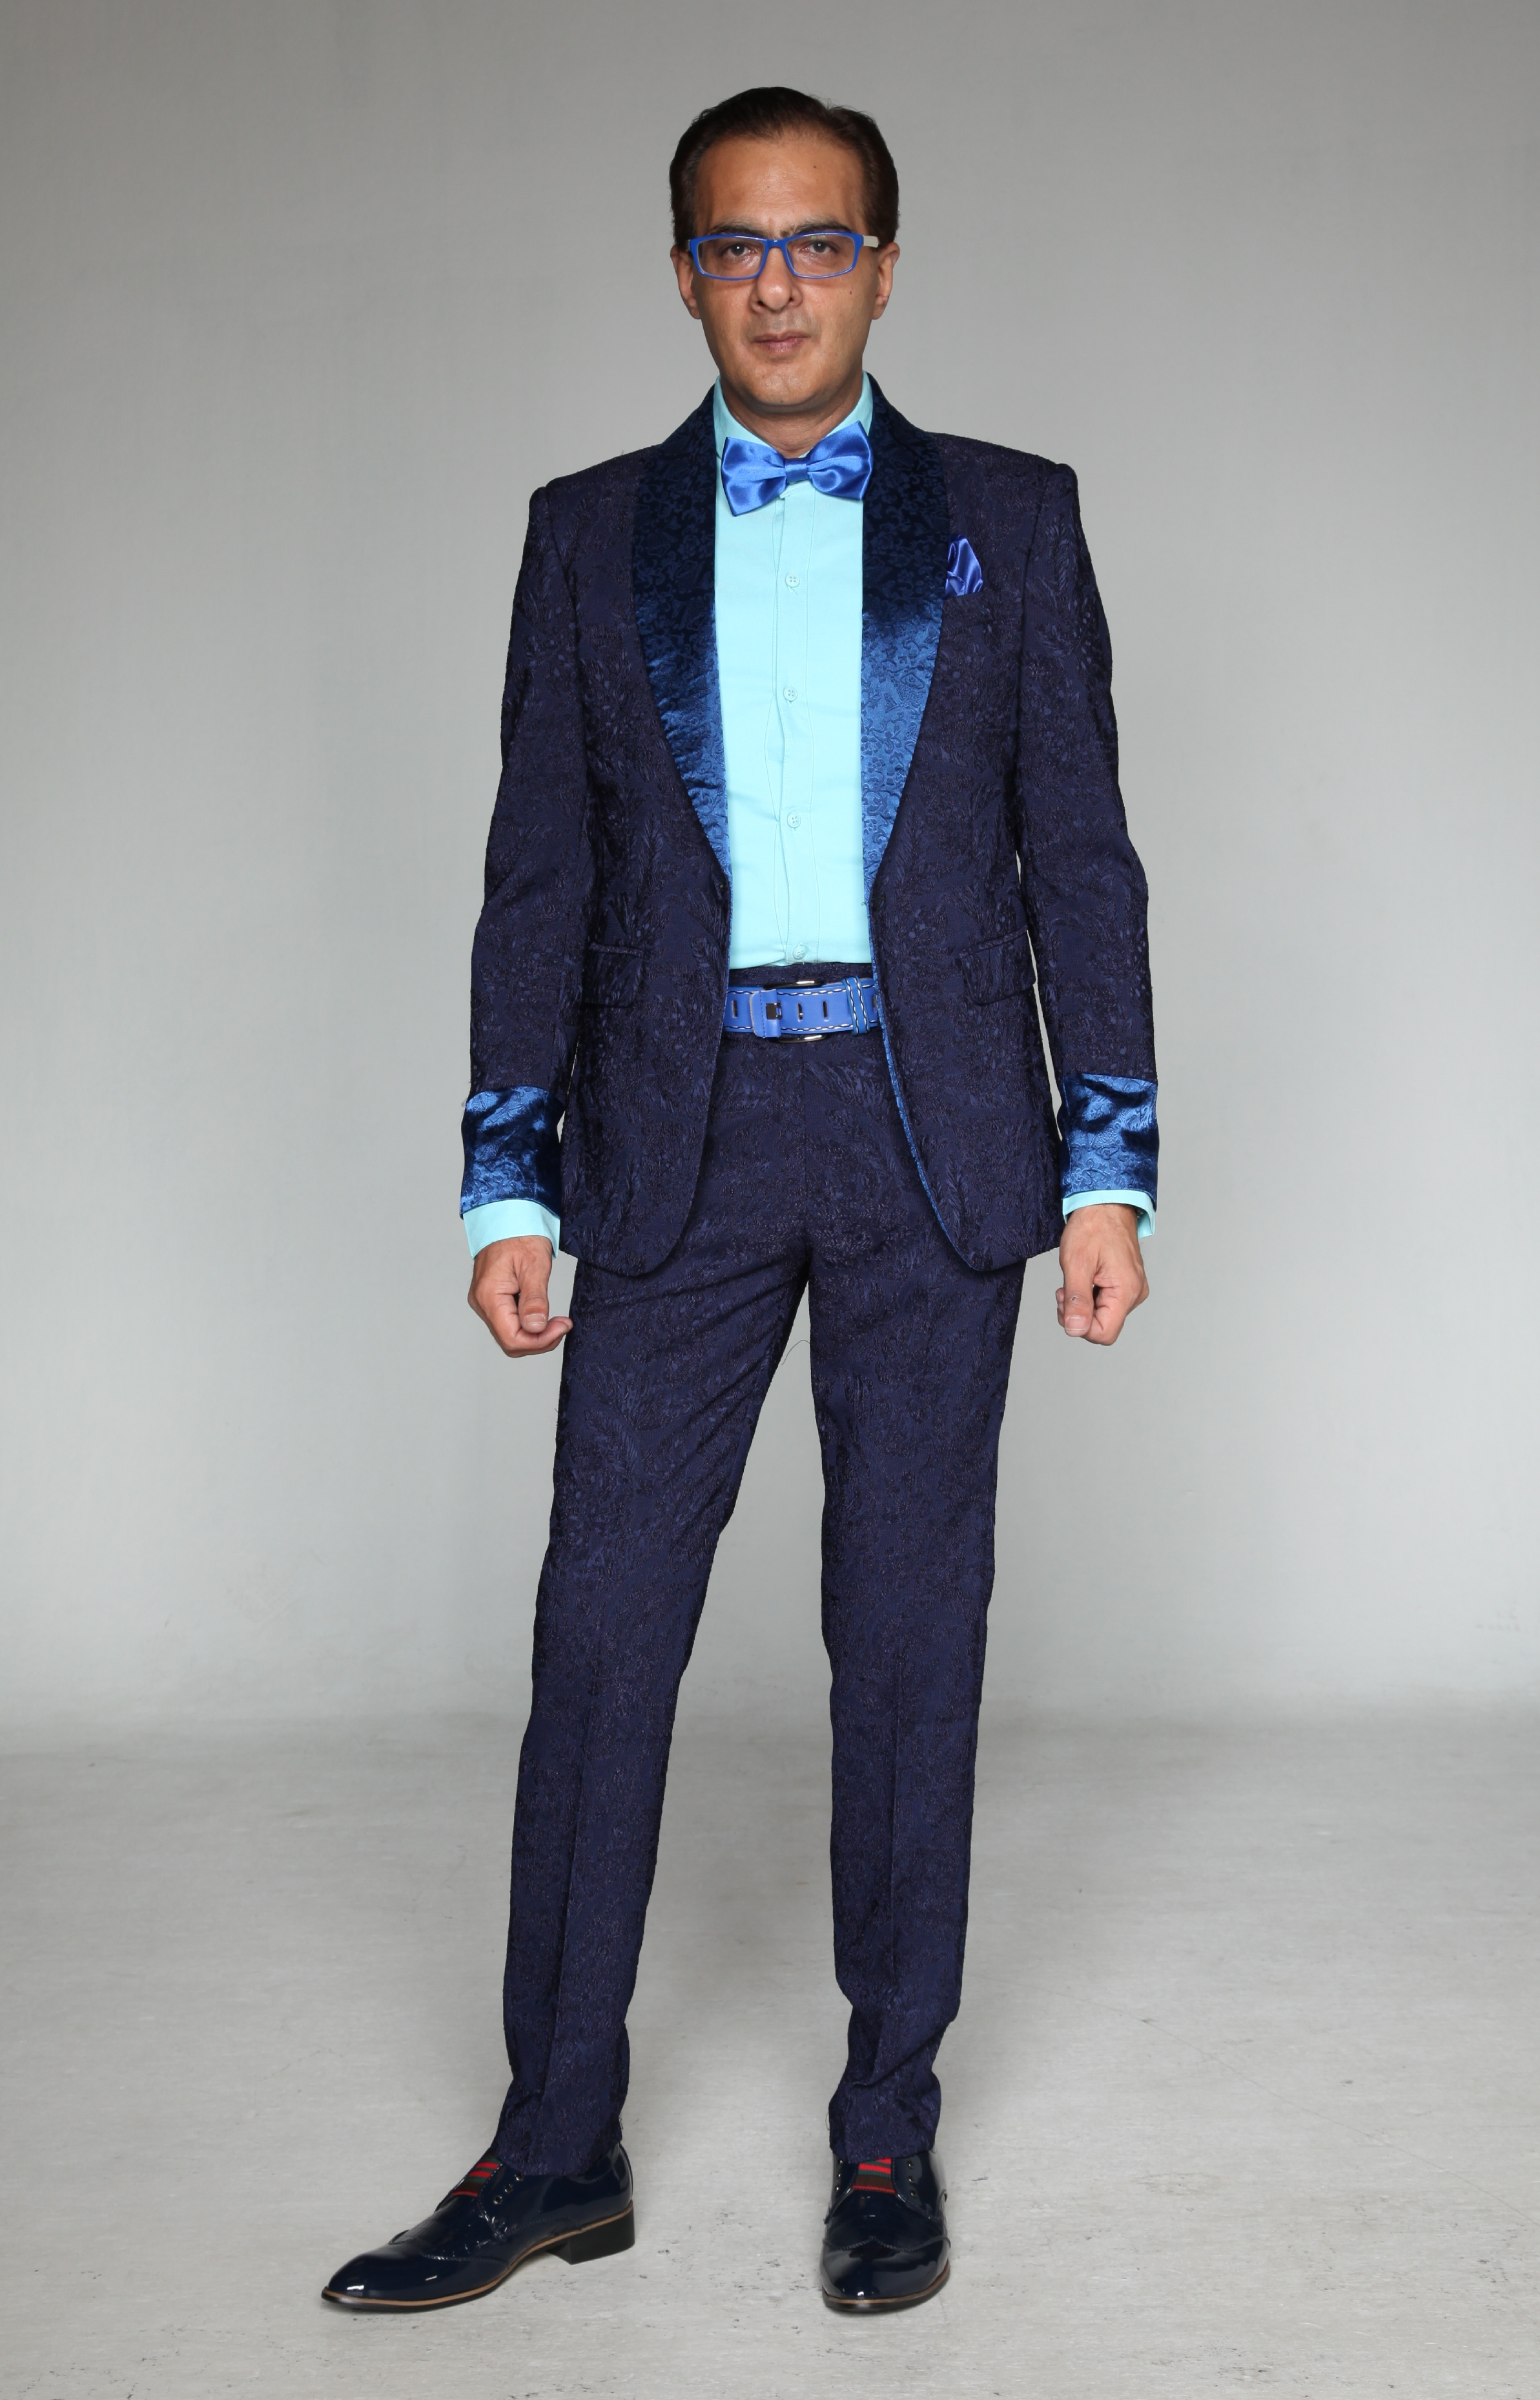 Suit Rental Suits Rent Hire Designer My Singapore Tailor Tailors Rentals Shop Tuxedo Black Tie Wedding Formal 45